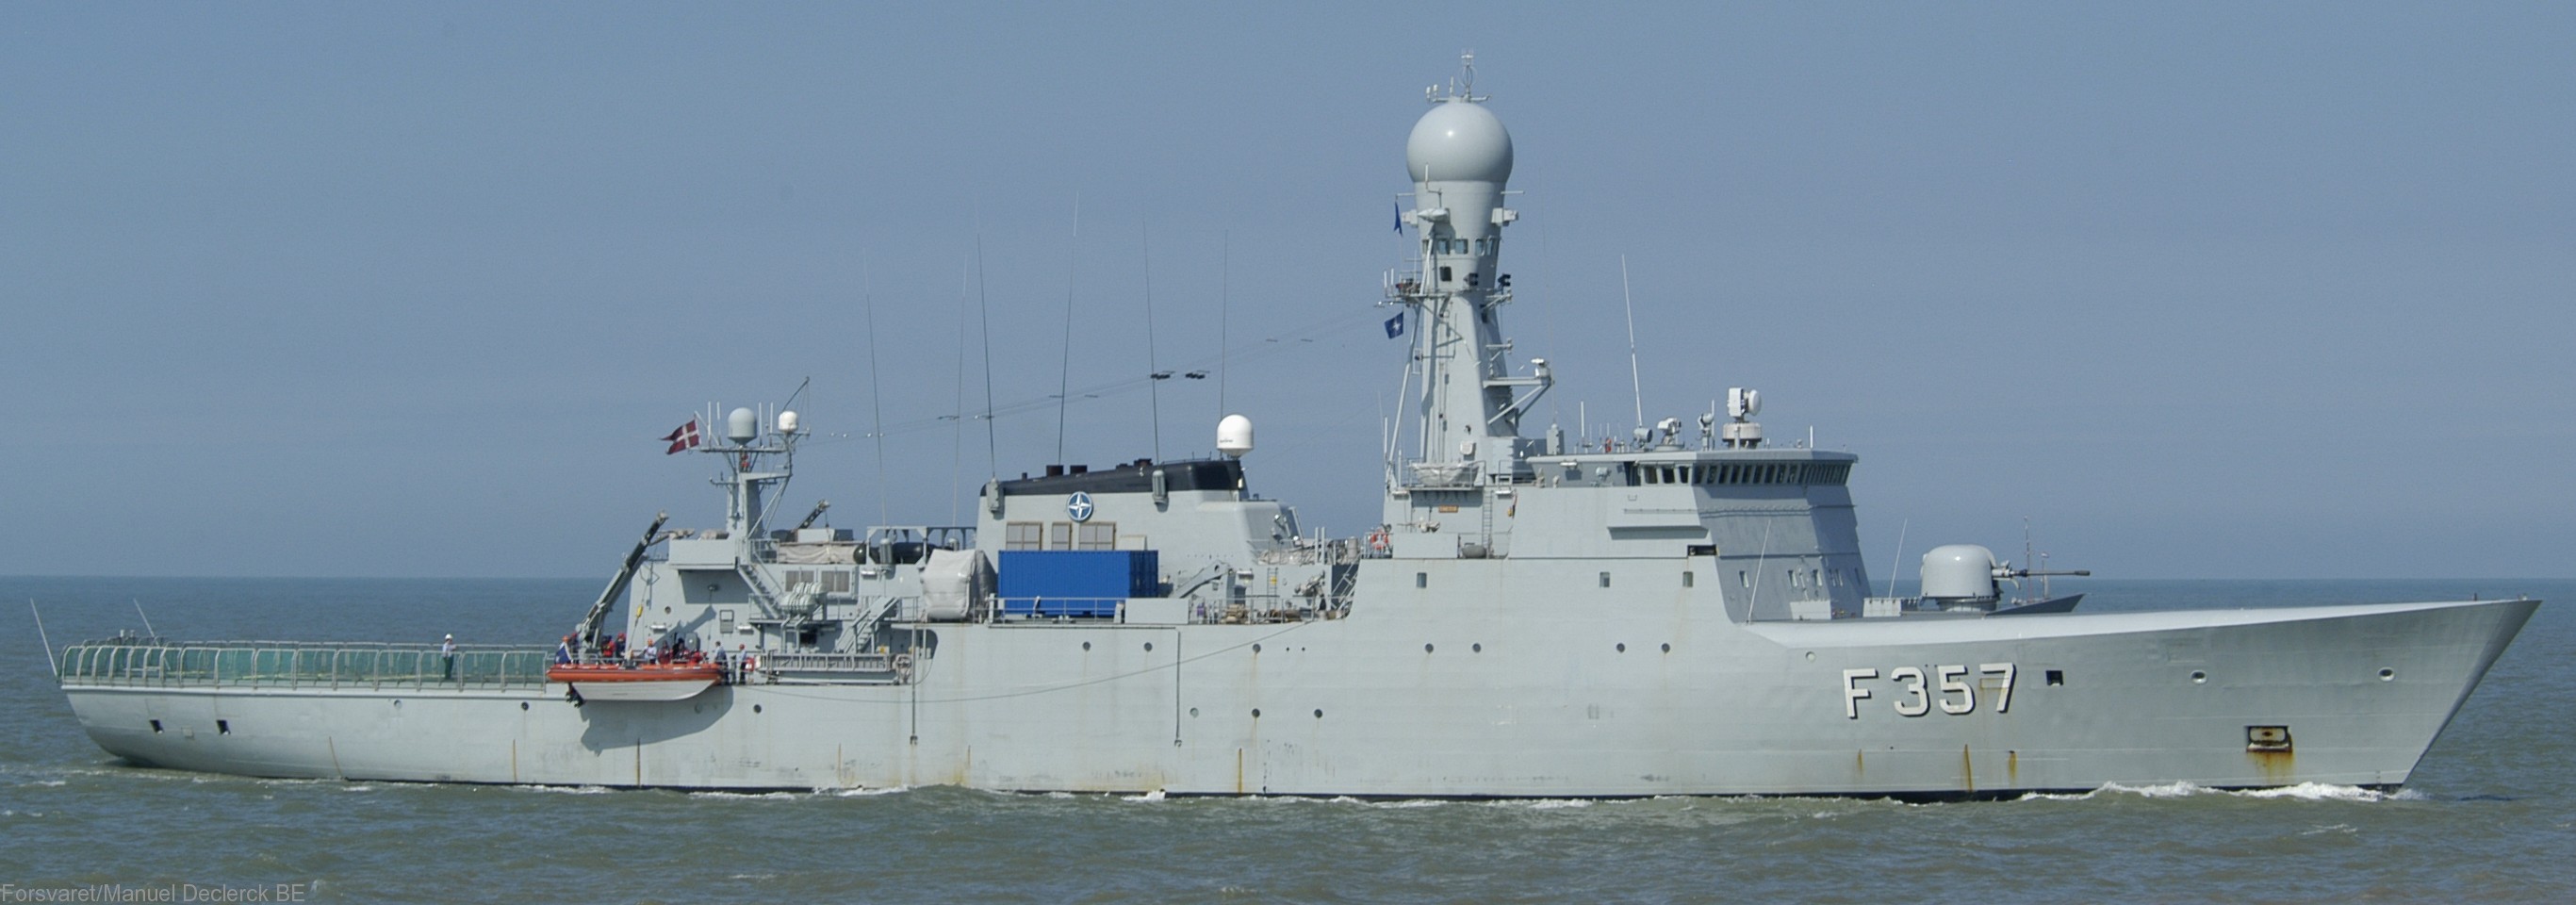 f-357 hdms thetis ocean patrol frigate royal danish navy kongelige danske marine inspektionsskibet 30